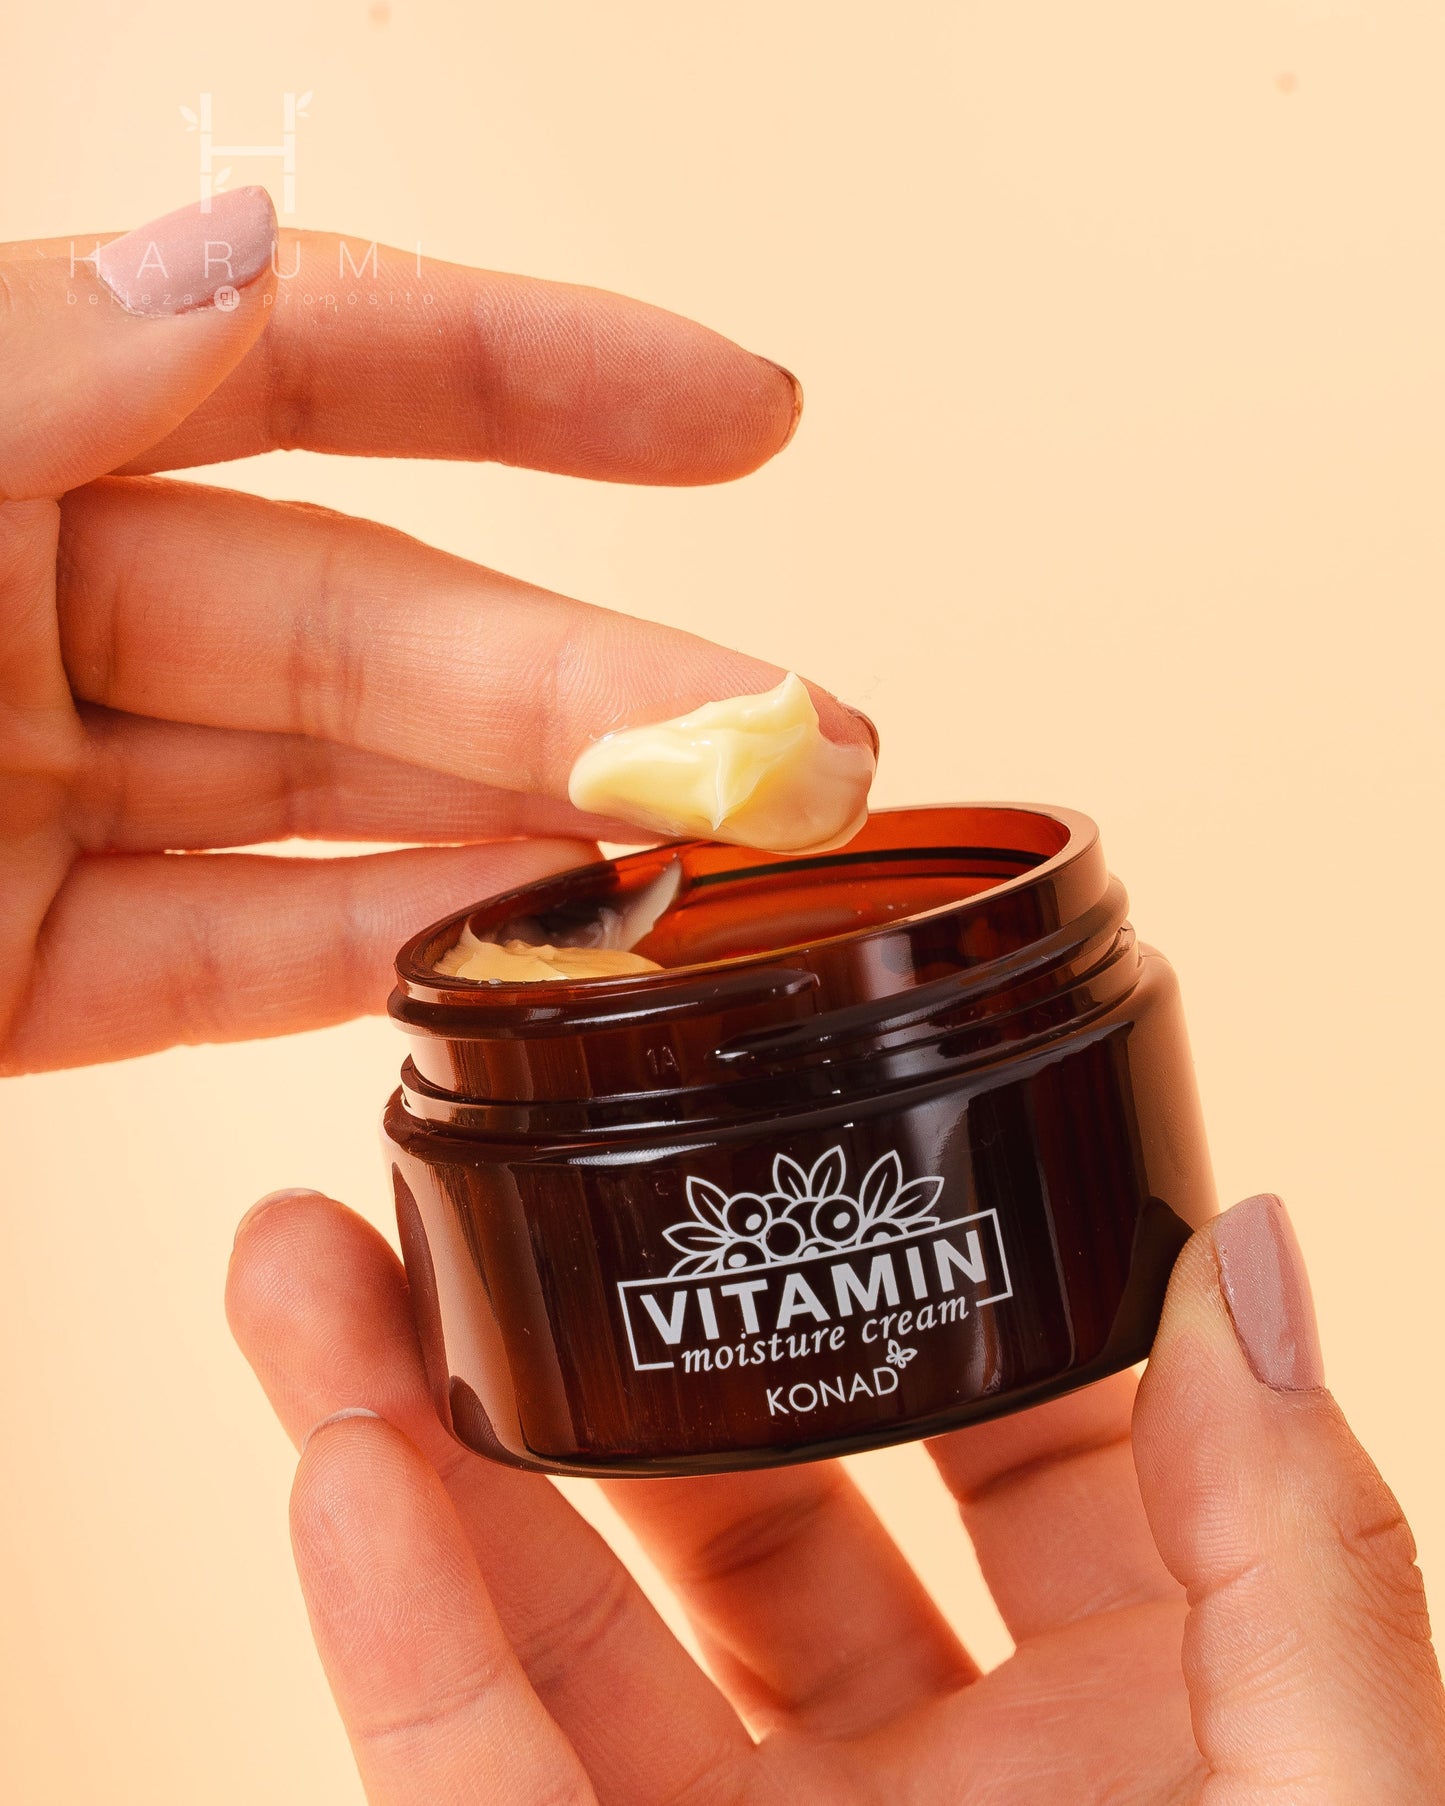 Konad Vitamin Moisture Cream Skincare maquillaje productos de belleza coreanos en Colombia kbeauty